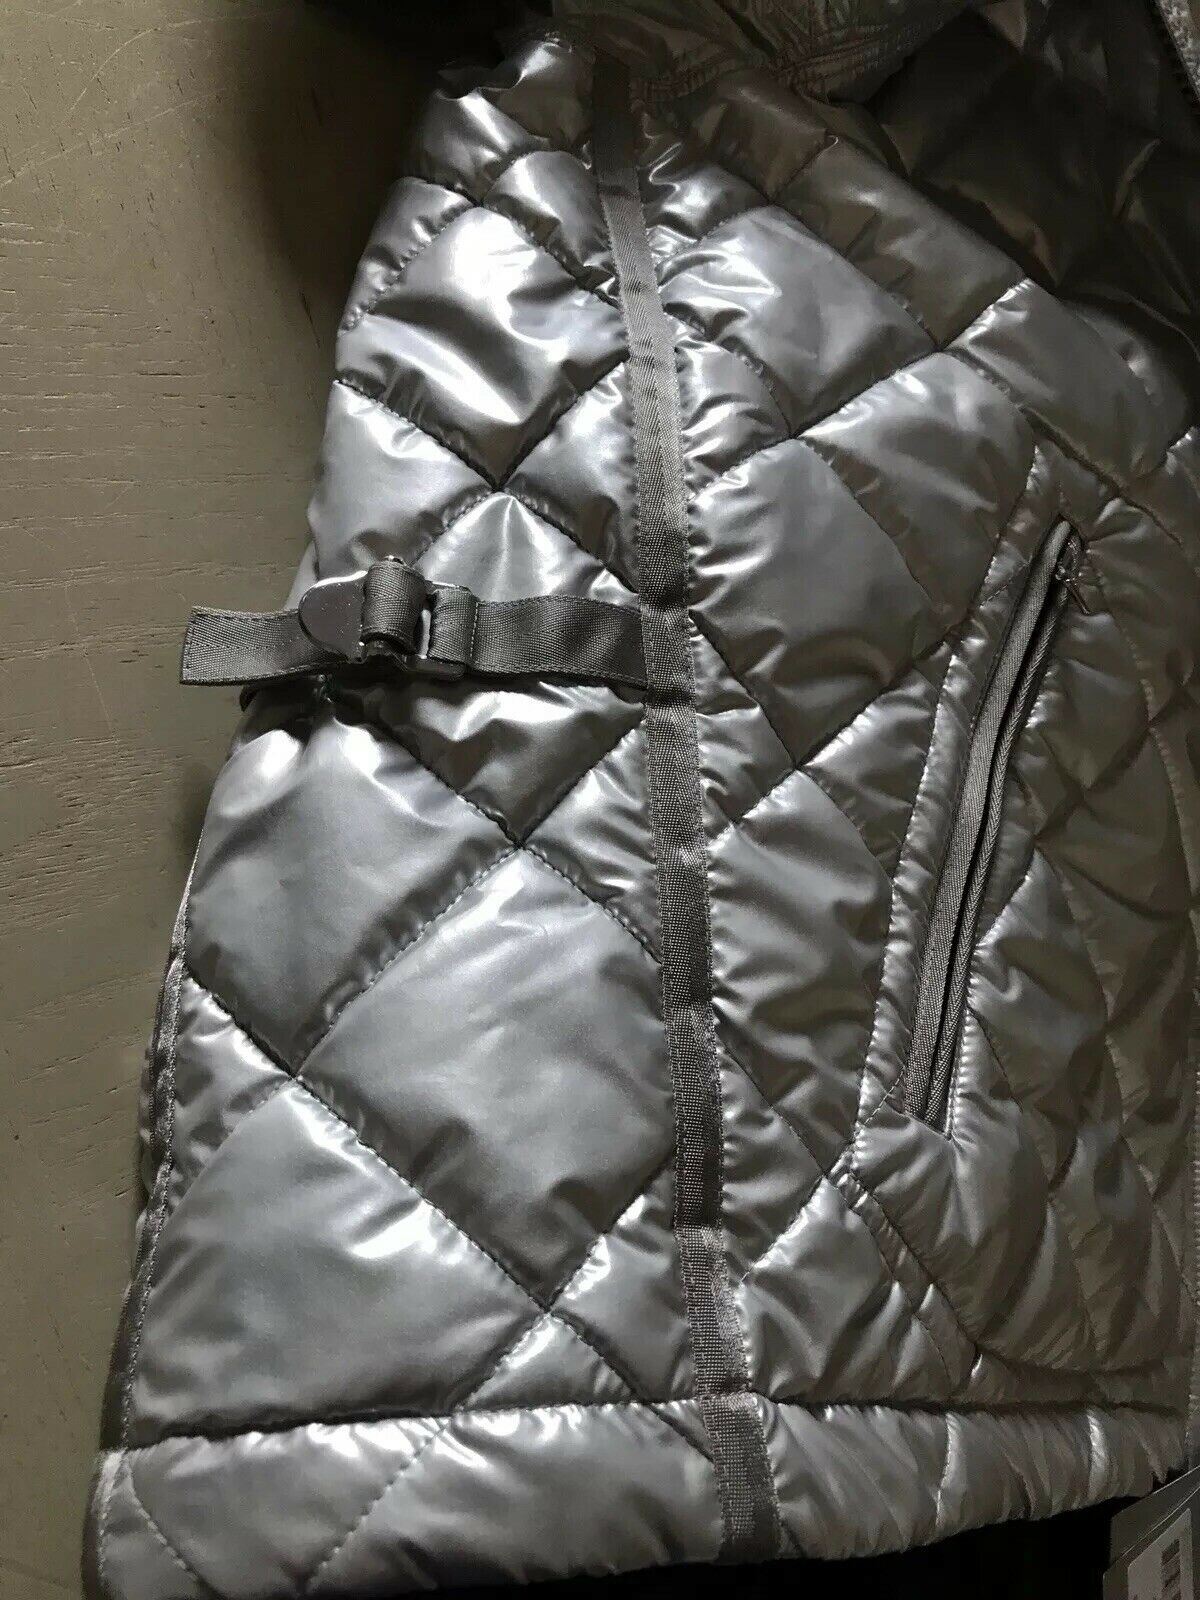 New$1295 Ralph Lauren Purple Label RLX Men Puffer Jacket Coat Silver Size XL